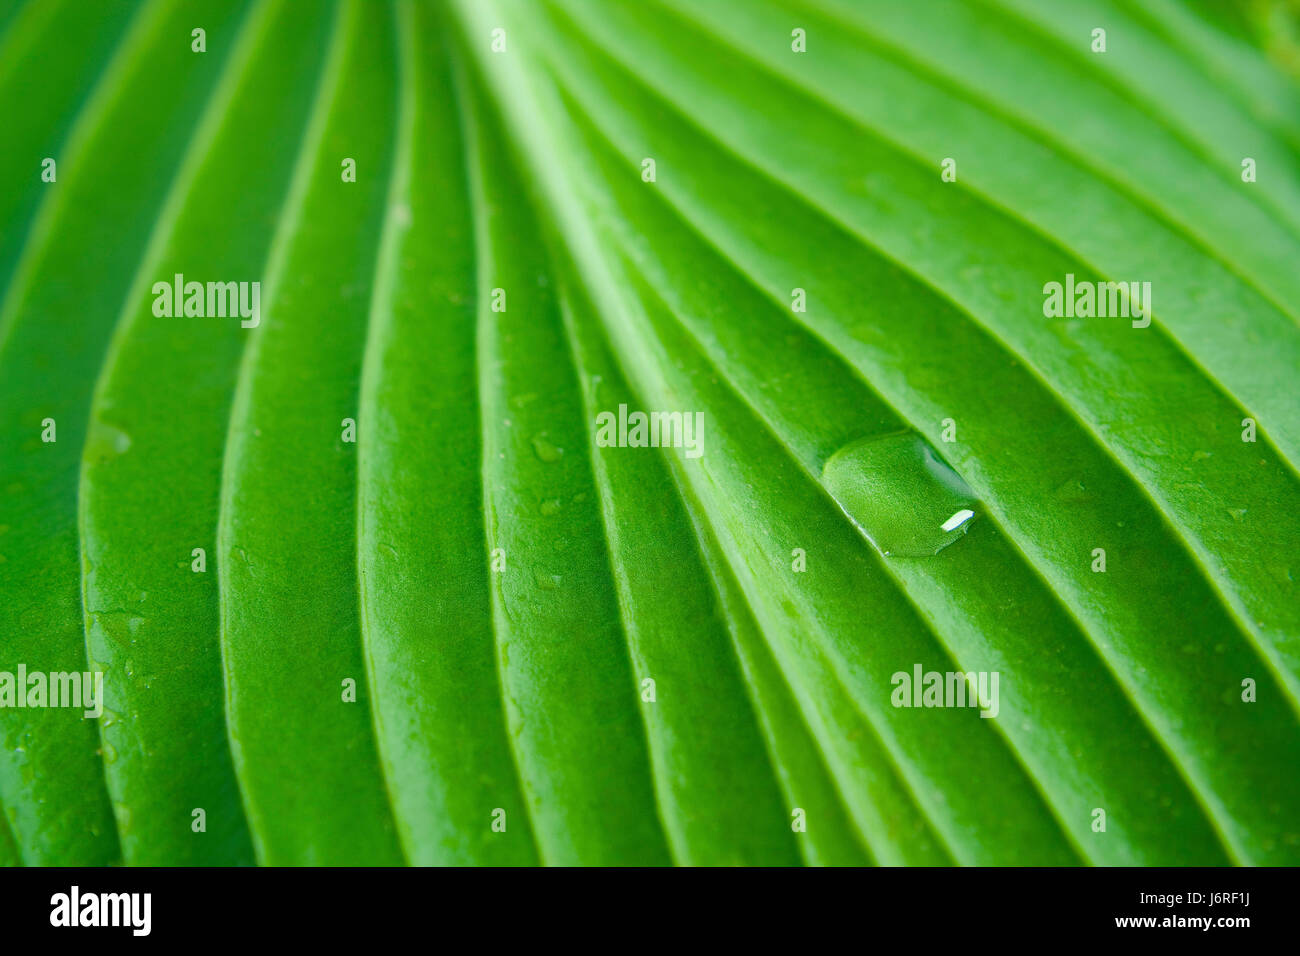 closeup wetter reflexion leaf macro close-up macro admission close up view life Stock Photo